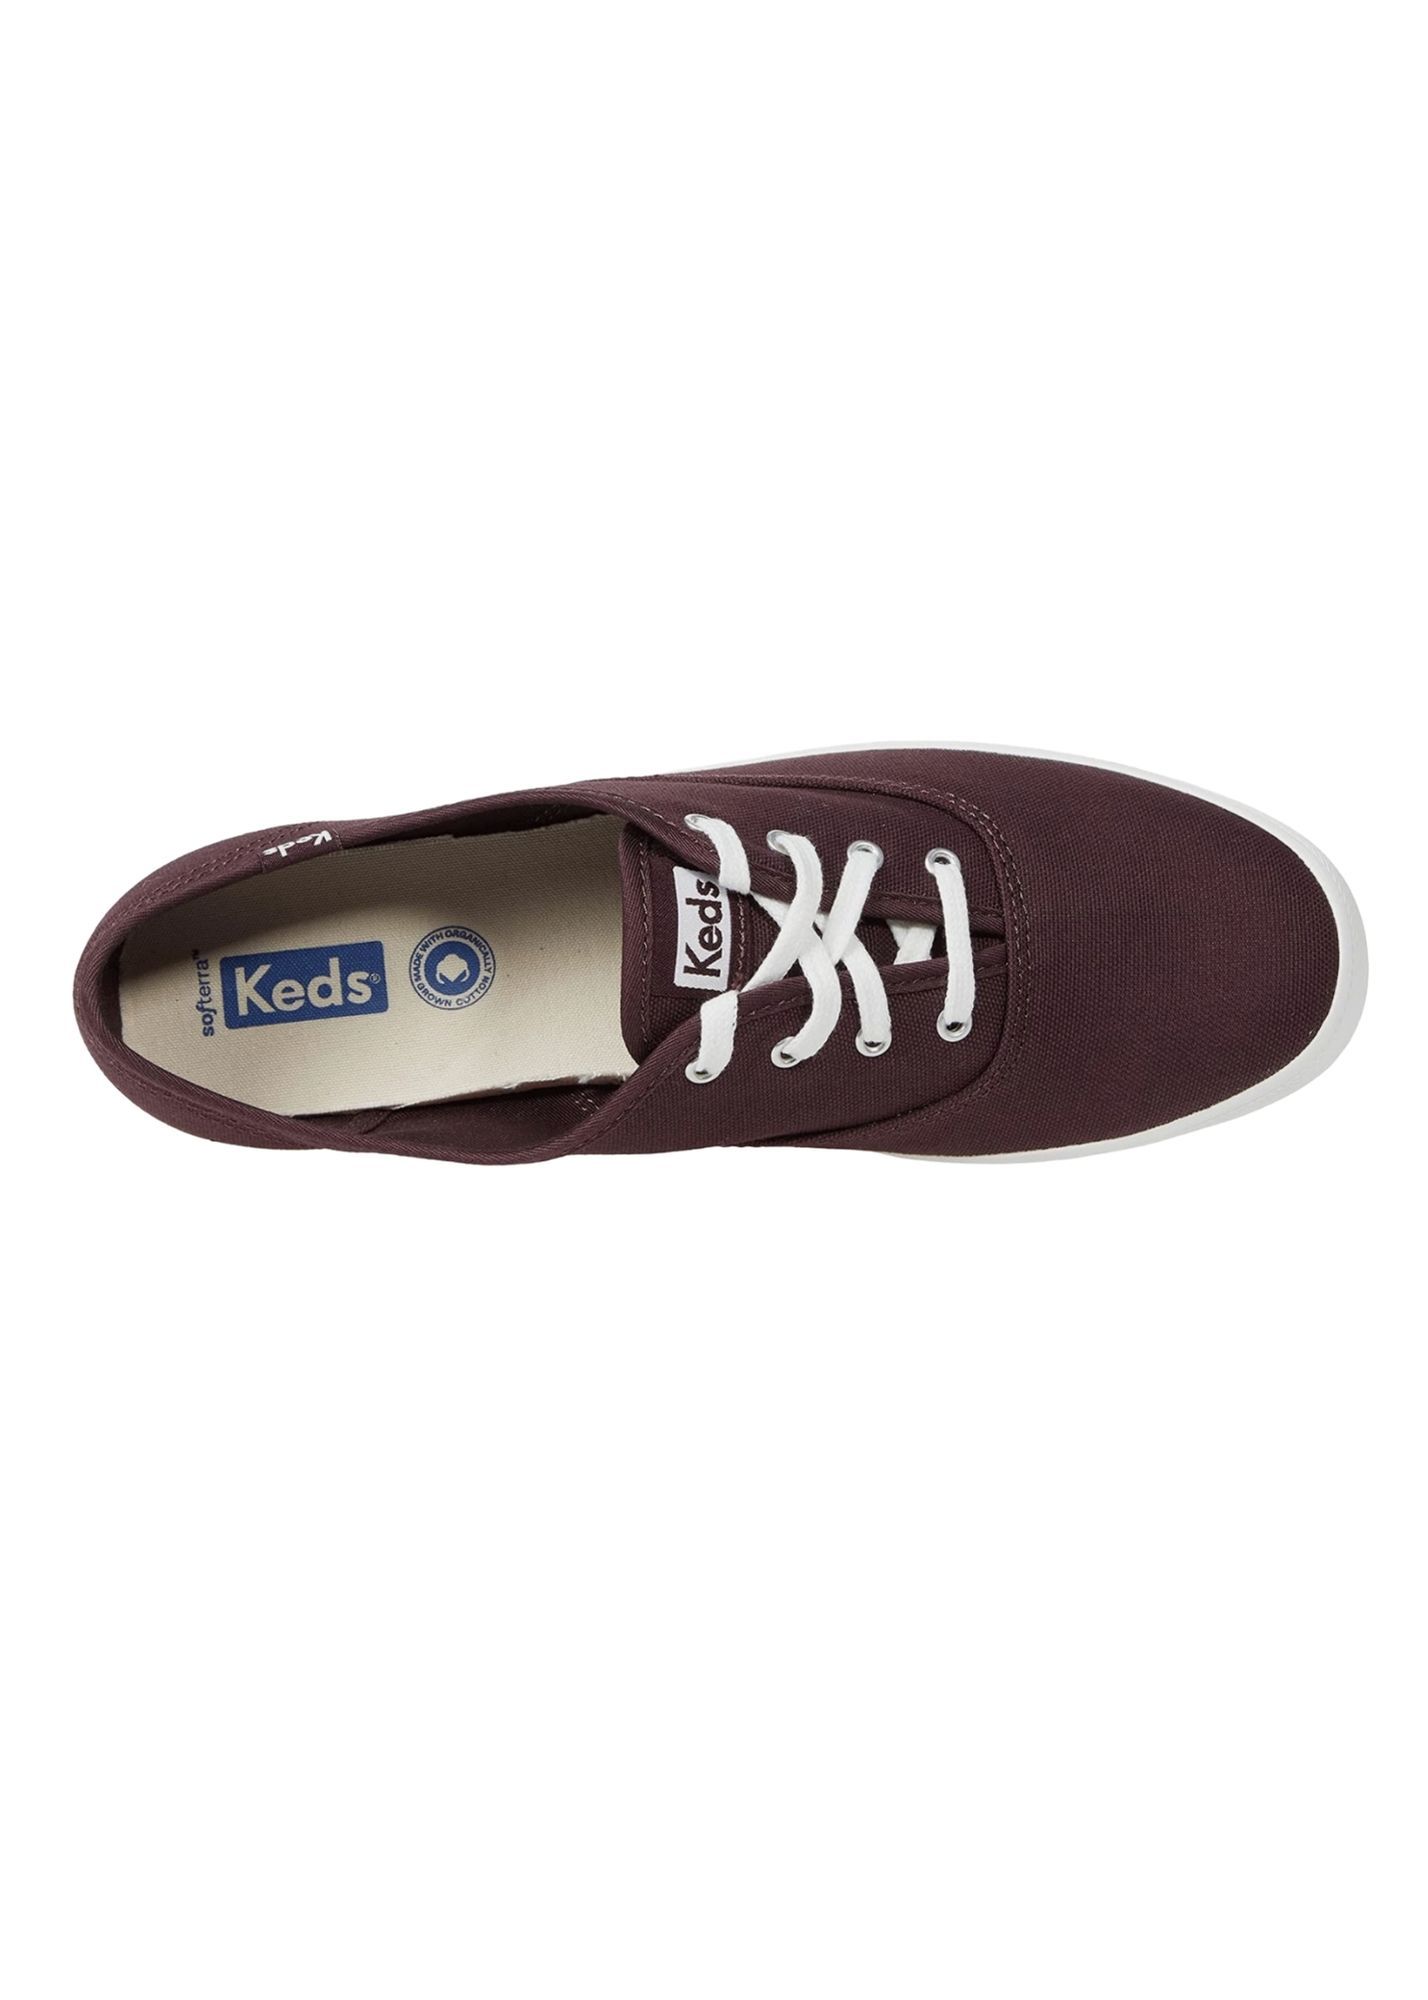 Keds Burgundy Canvas Sneaker - FINAL SALE Shoes Keds